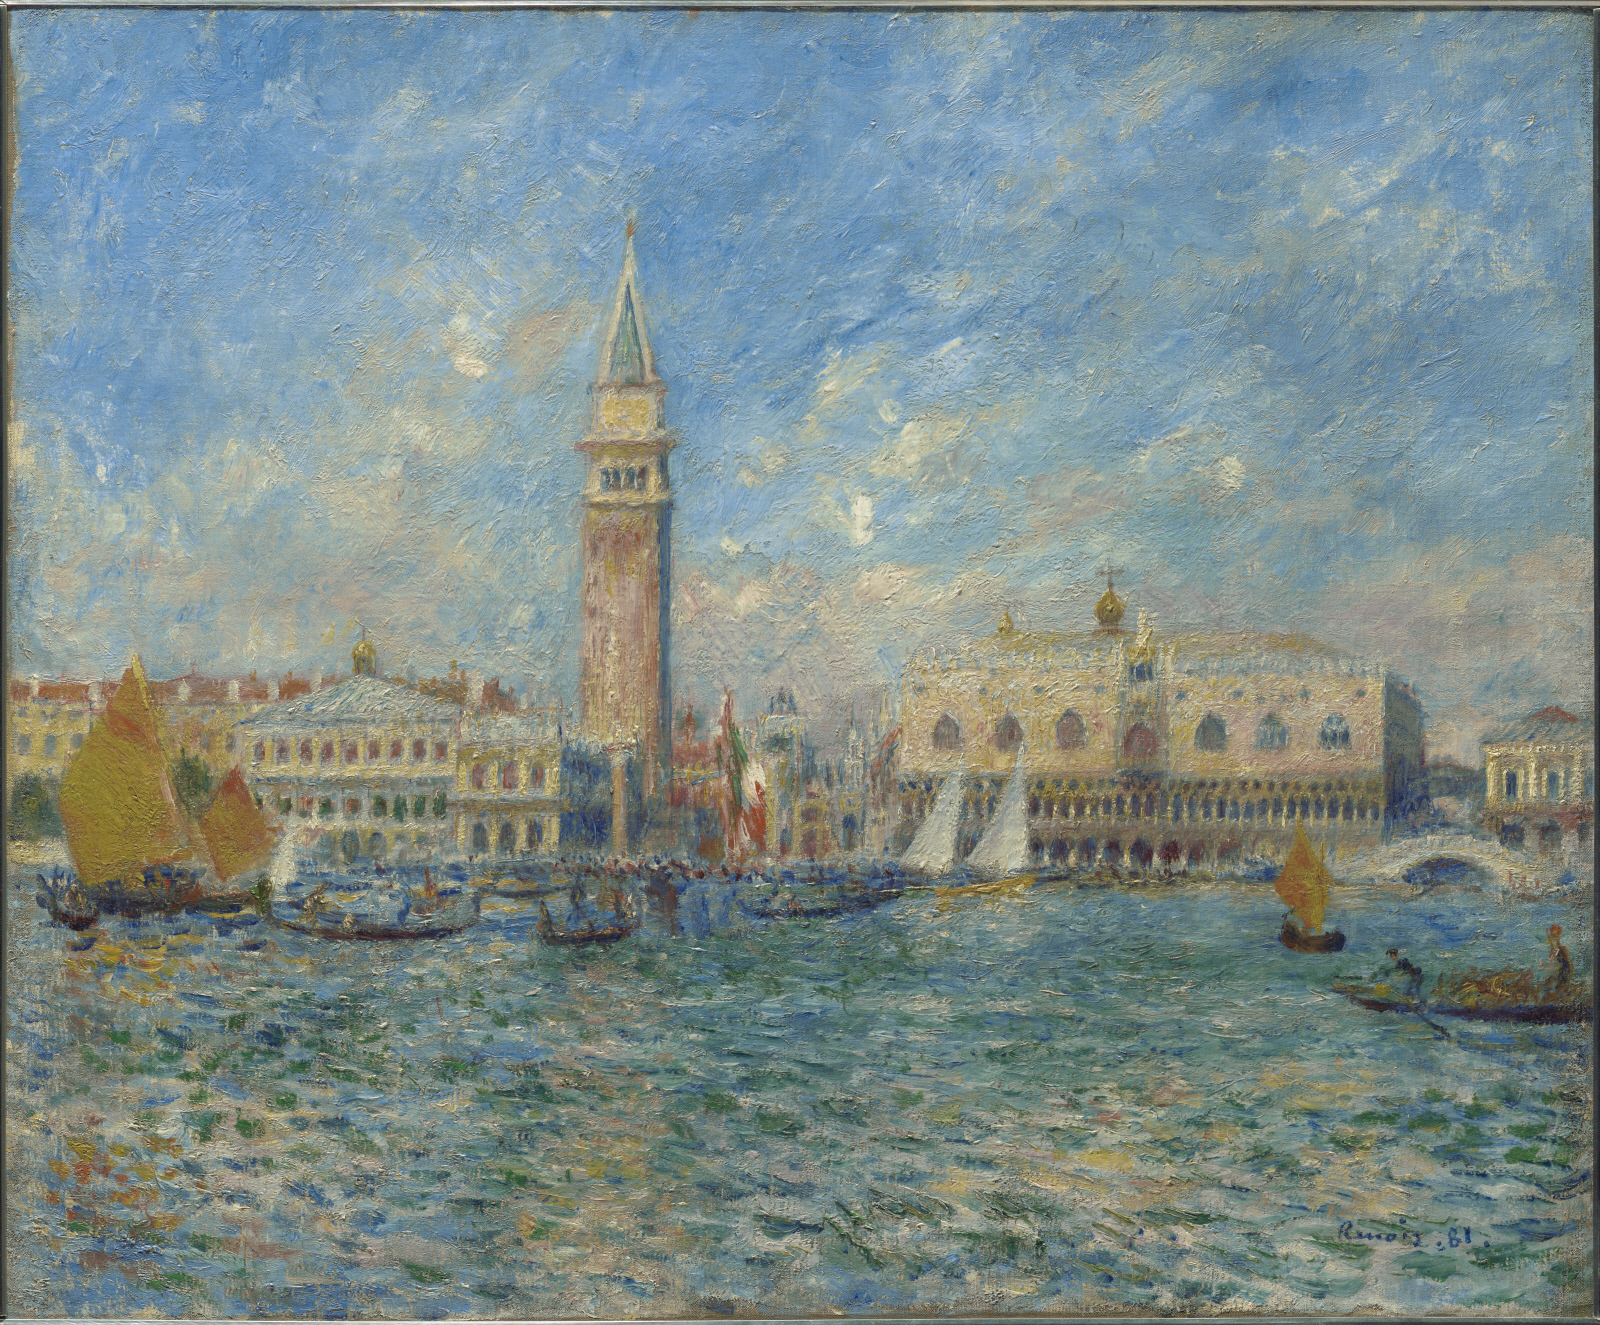 Venedik, Doge Sarayı by Pierre-Auguste Renoir - 1881 